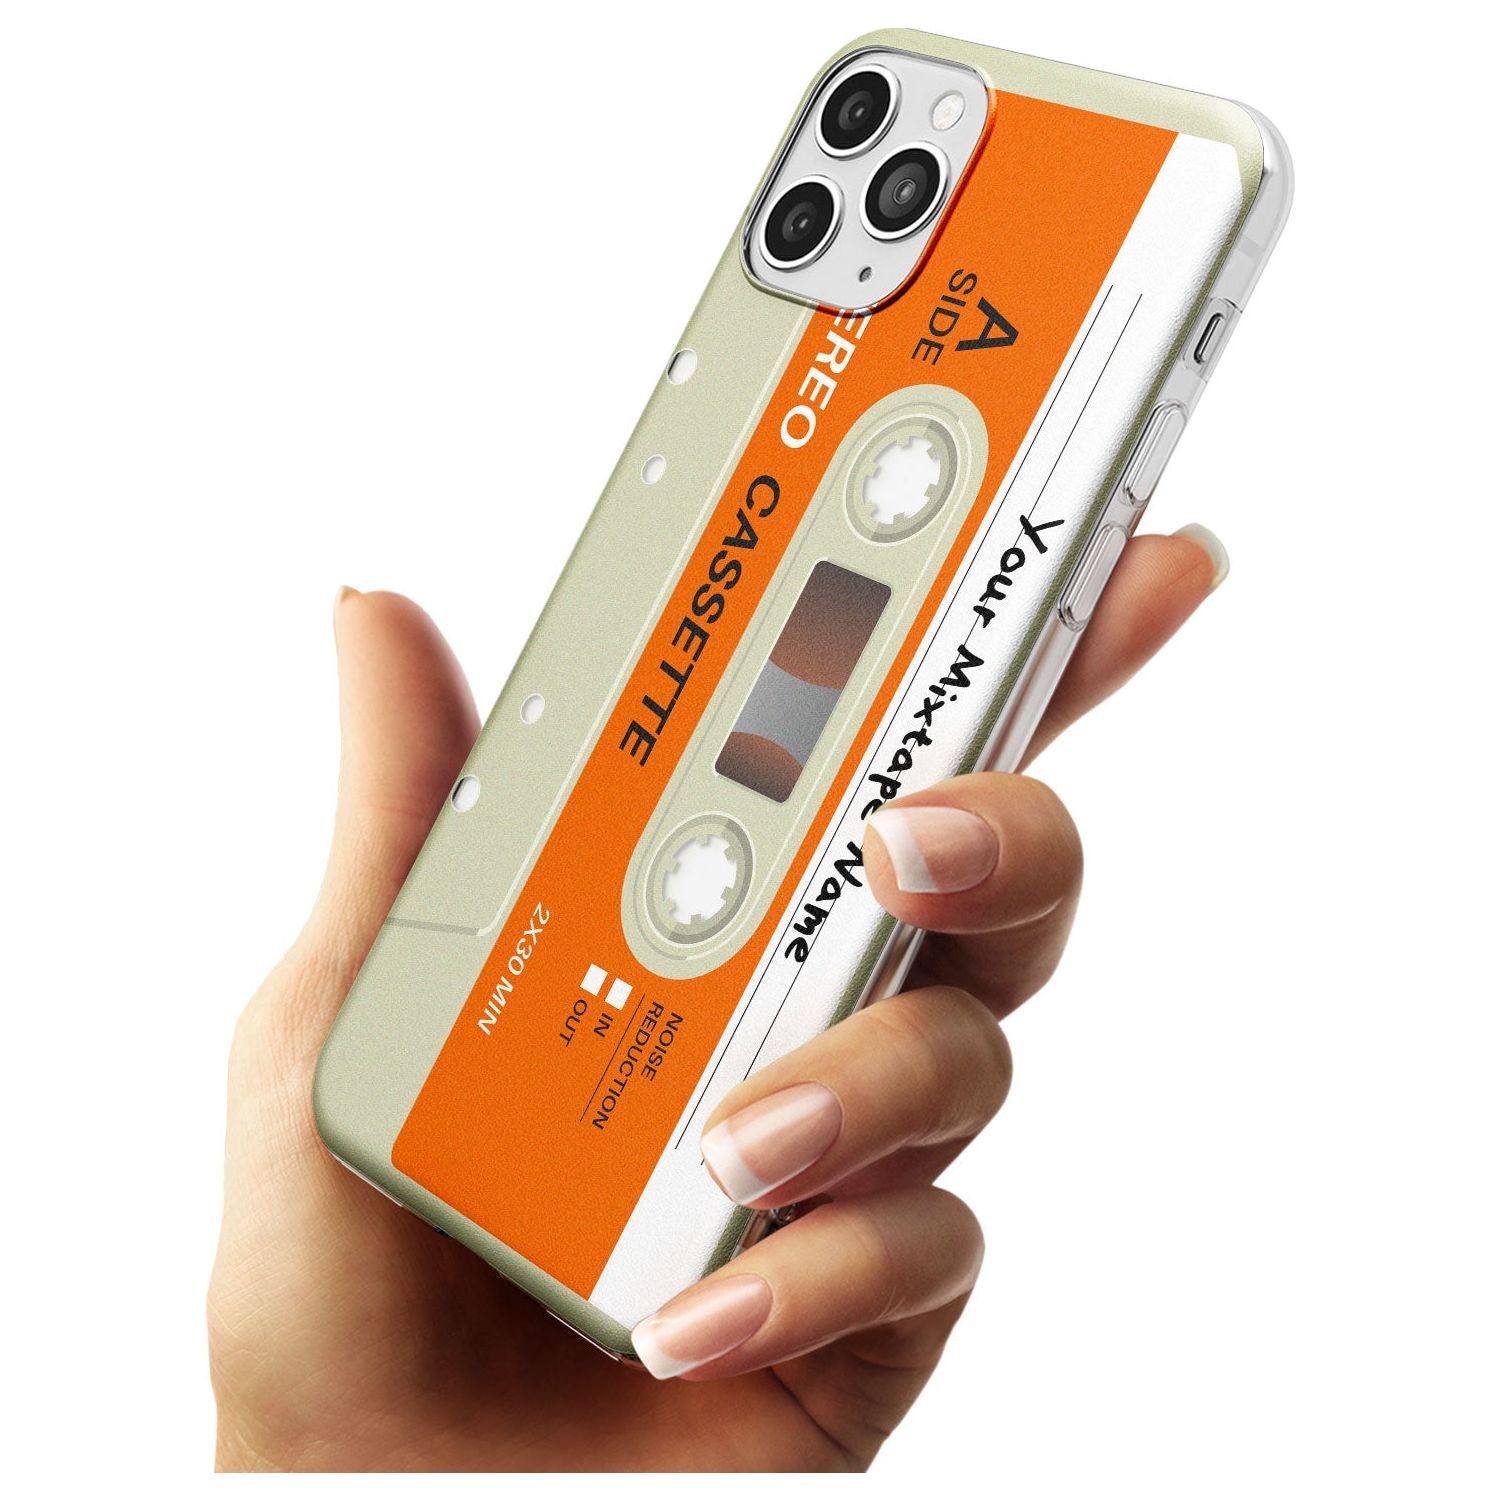 Classic Cassette Black Impact Phone Case for iPhone 11 Pro Max